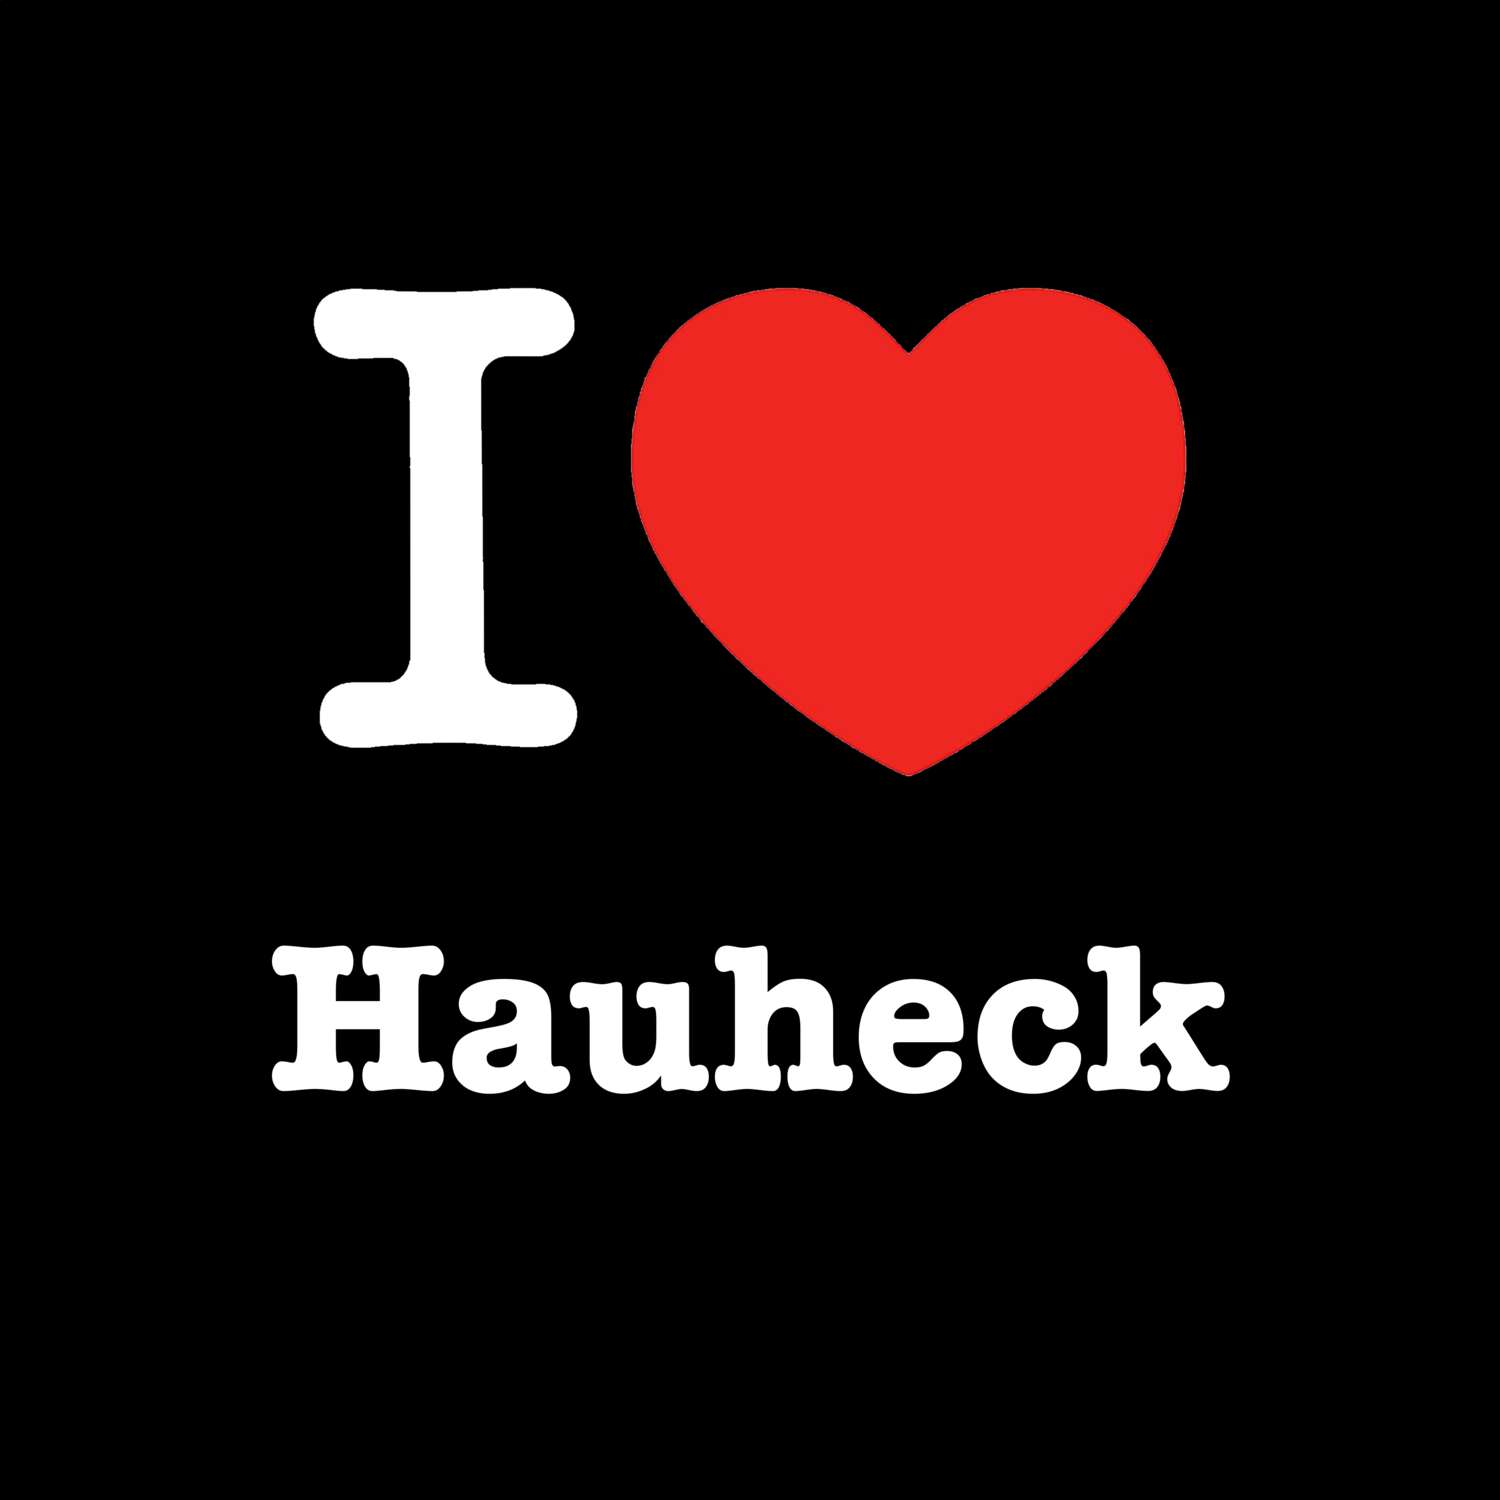 Hauheck T-Shirt »I love«